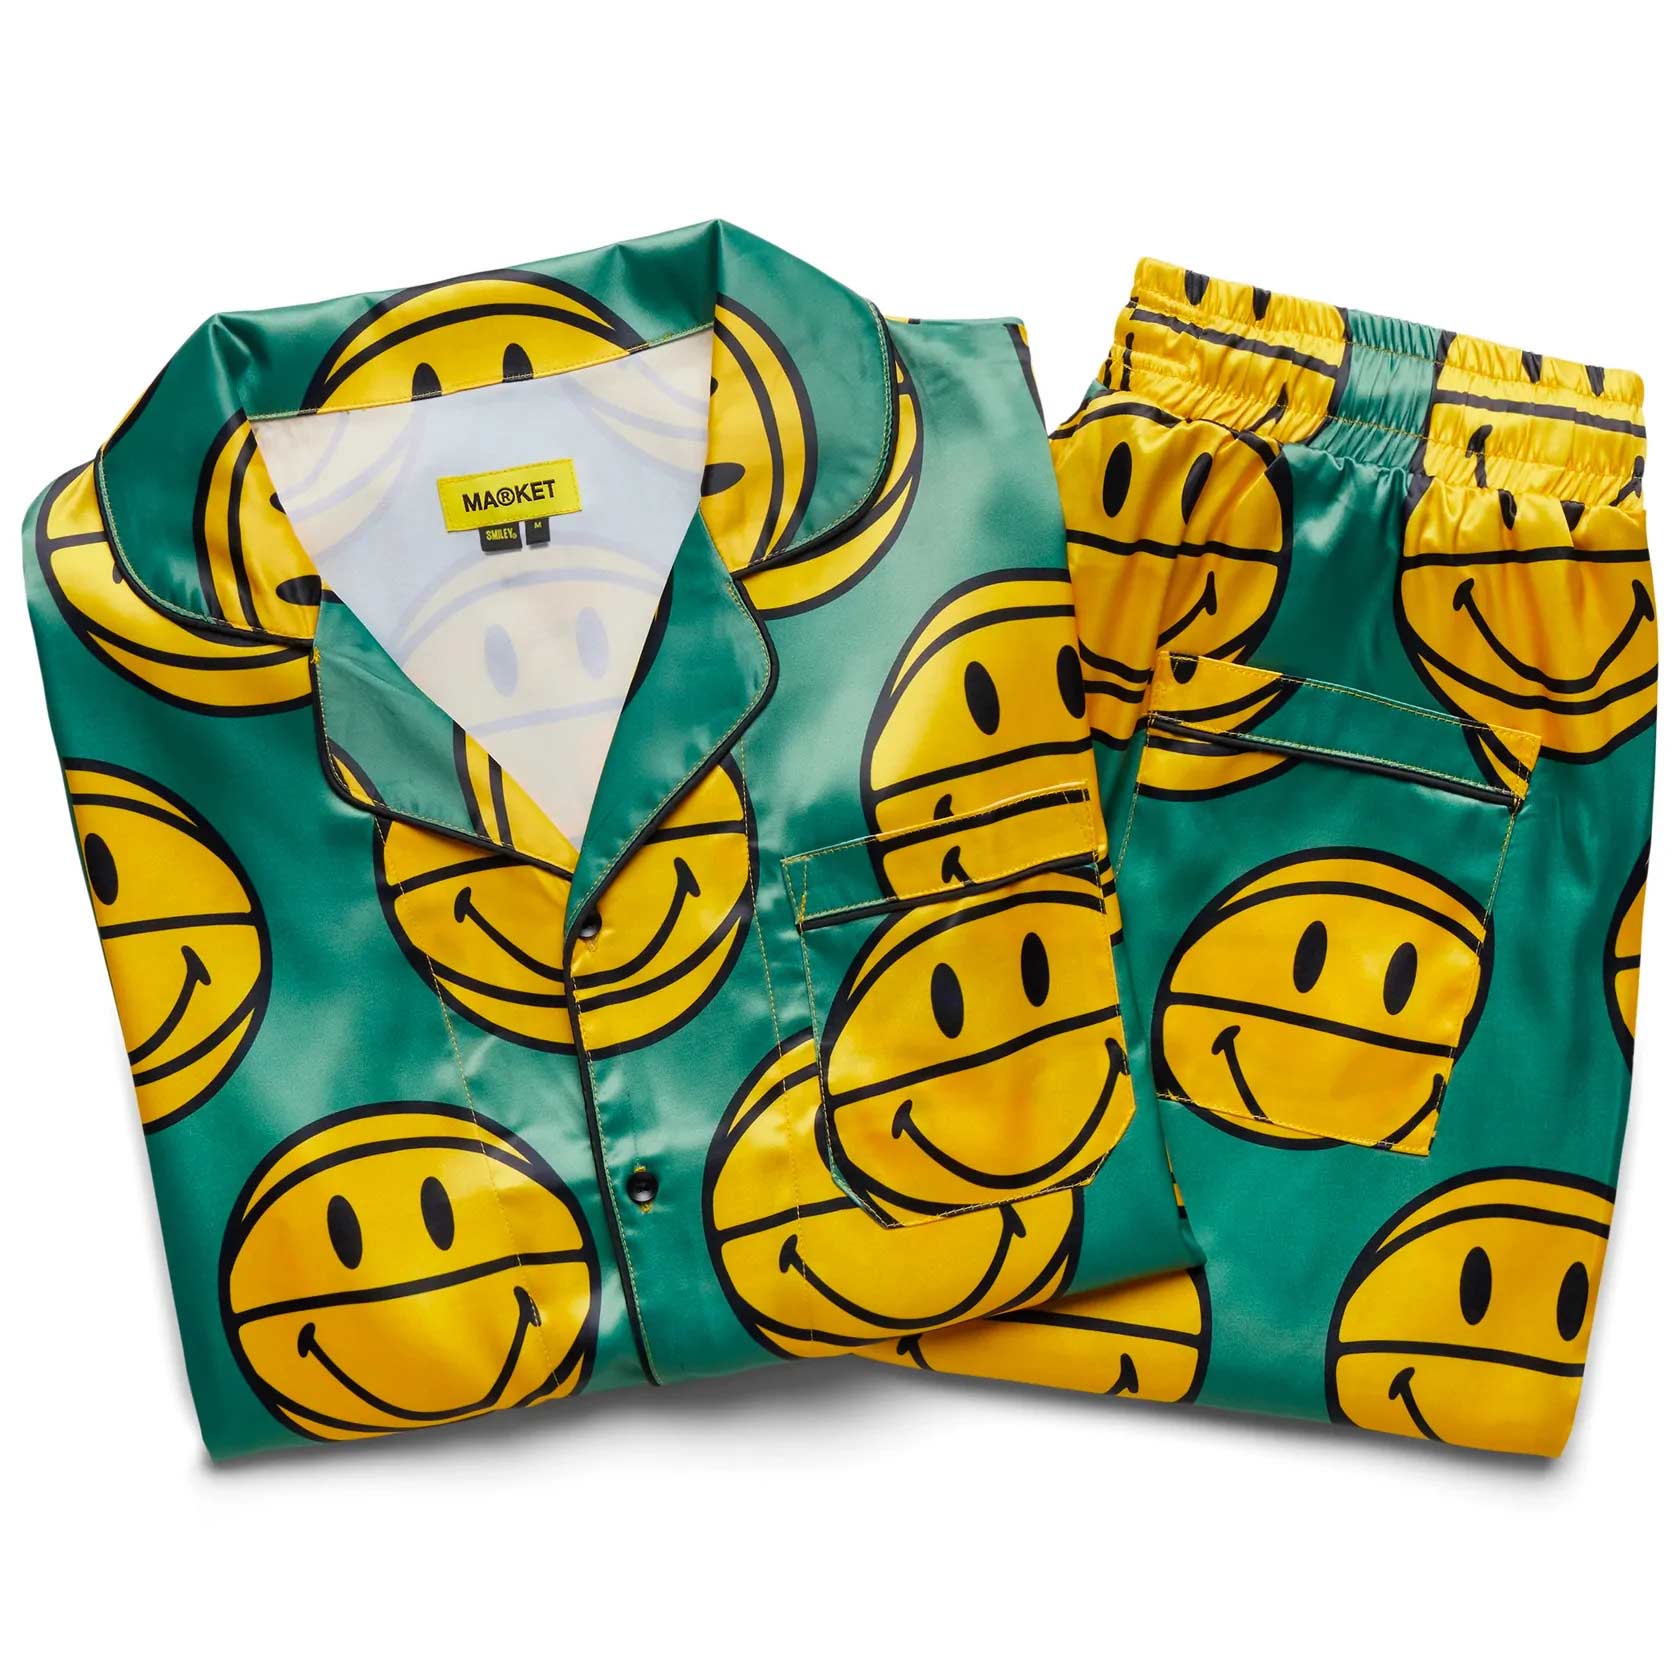 Market-Smiley-Basketball-Pajama-Set-Zupport